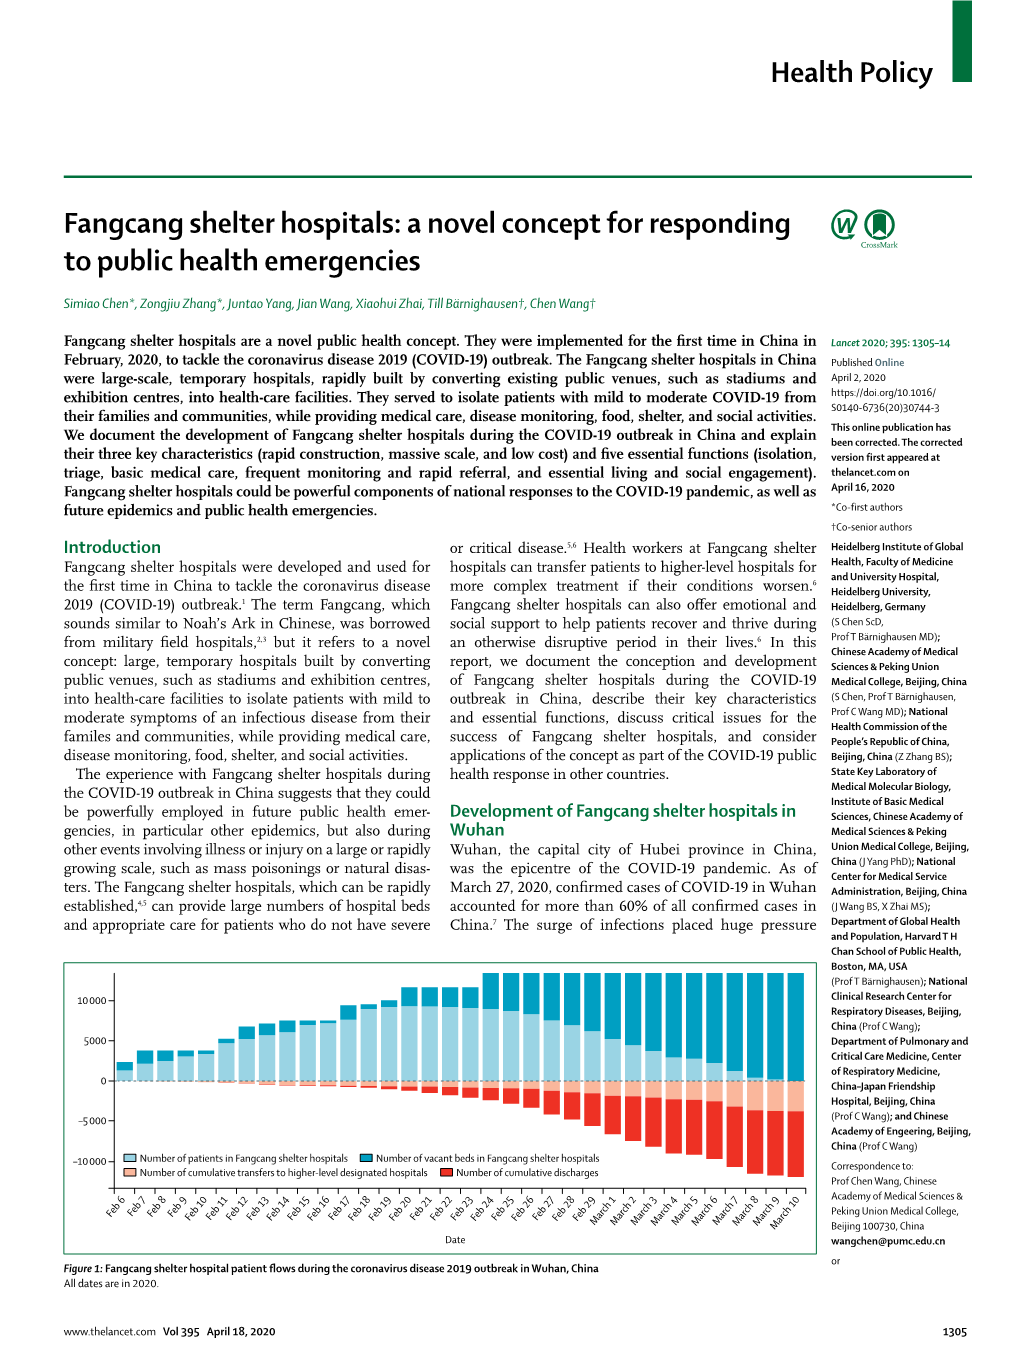 Fangcang Shelter Hospitals: a Novel Concept for Responding to Public Health Emergencies